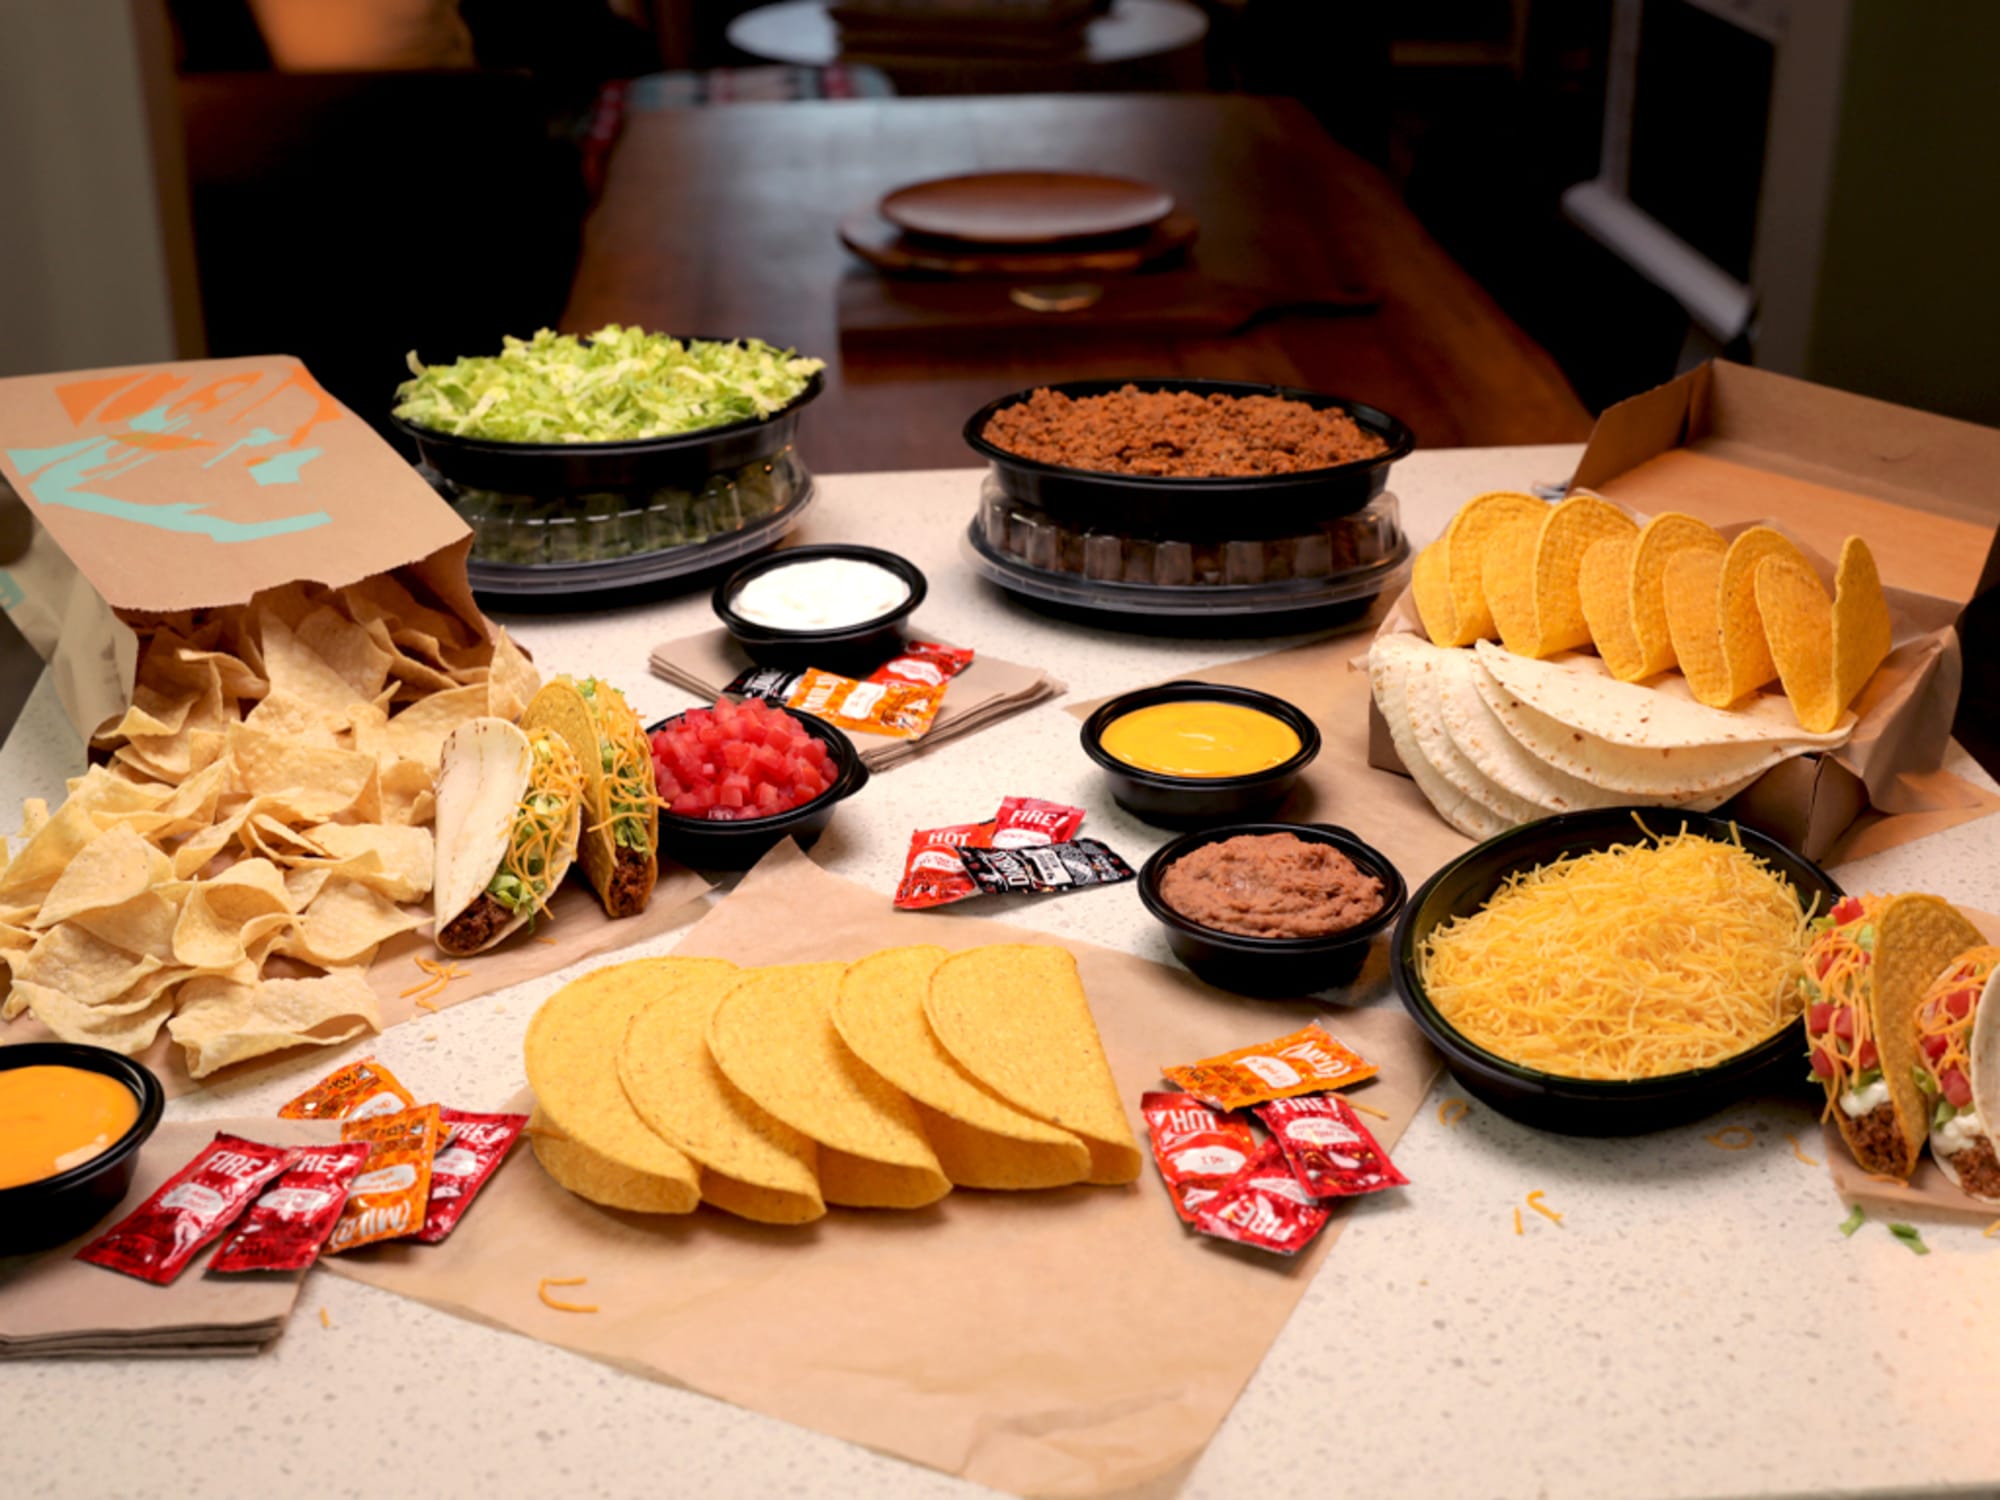 Taco bell display menu - actrety